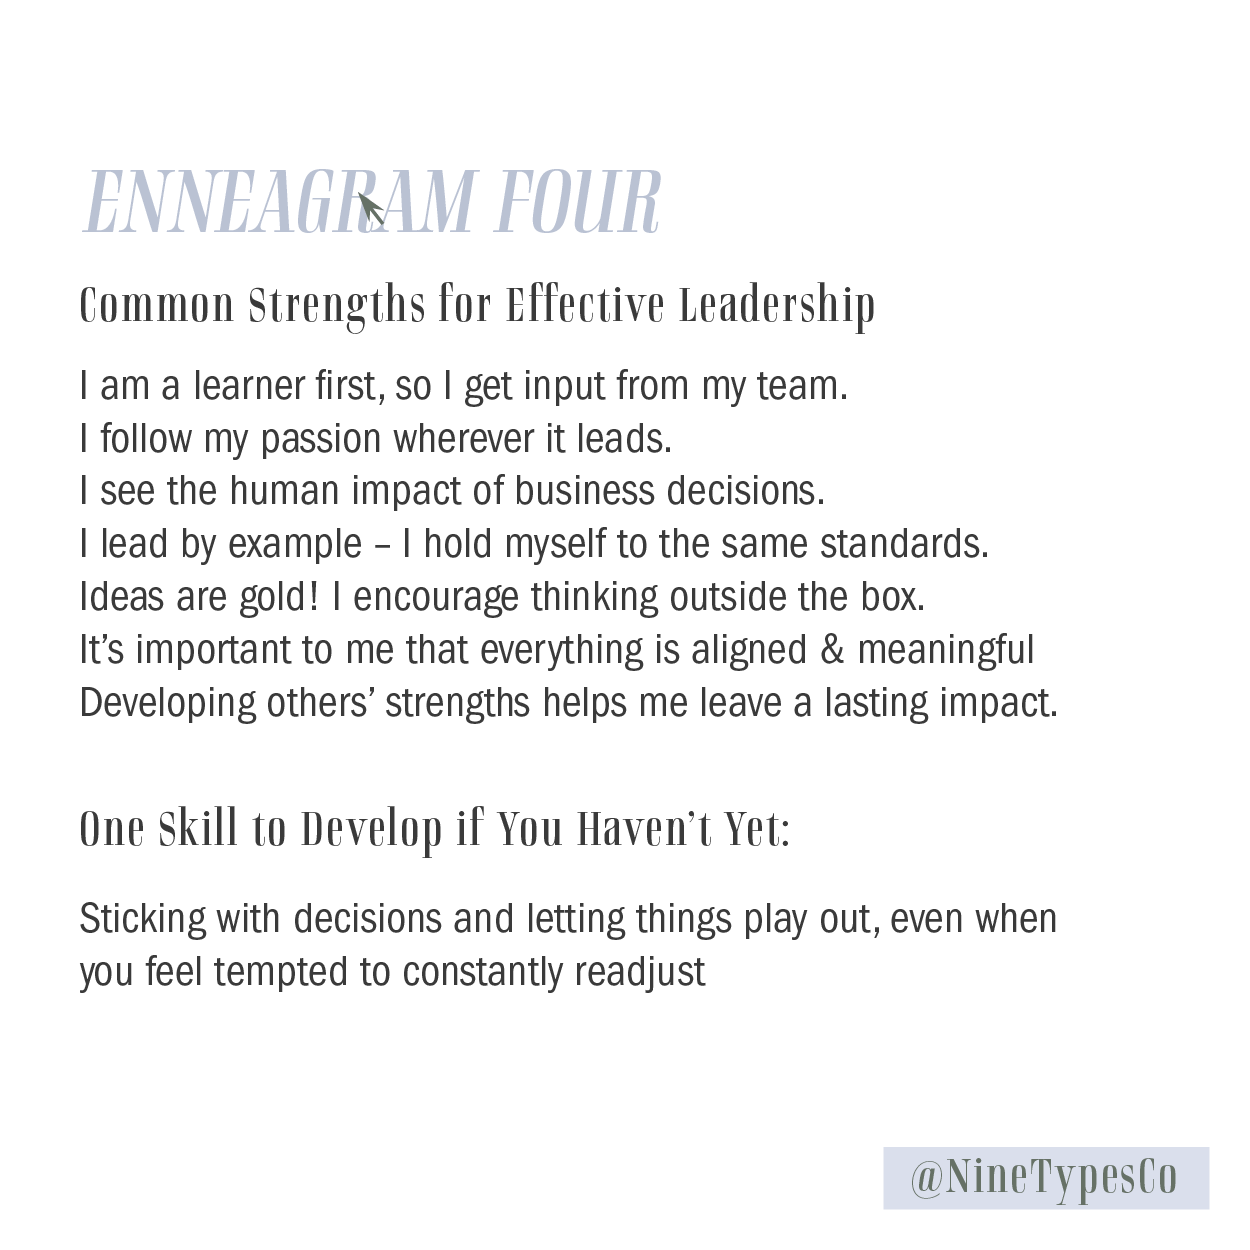 effective+leadership+by+enneagram+type+type+4+-+@0.5x.png